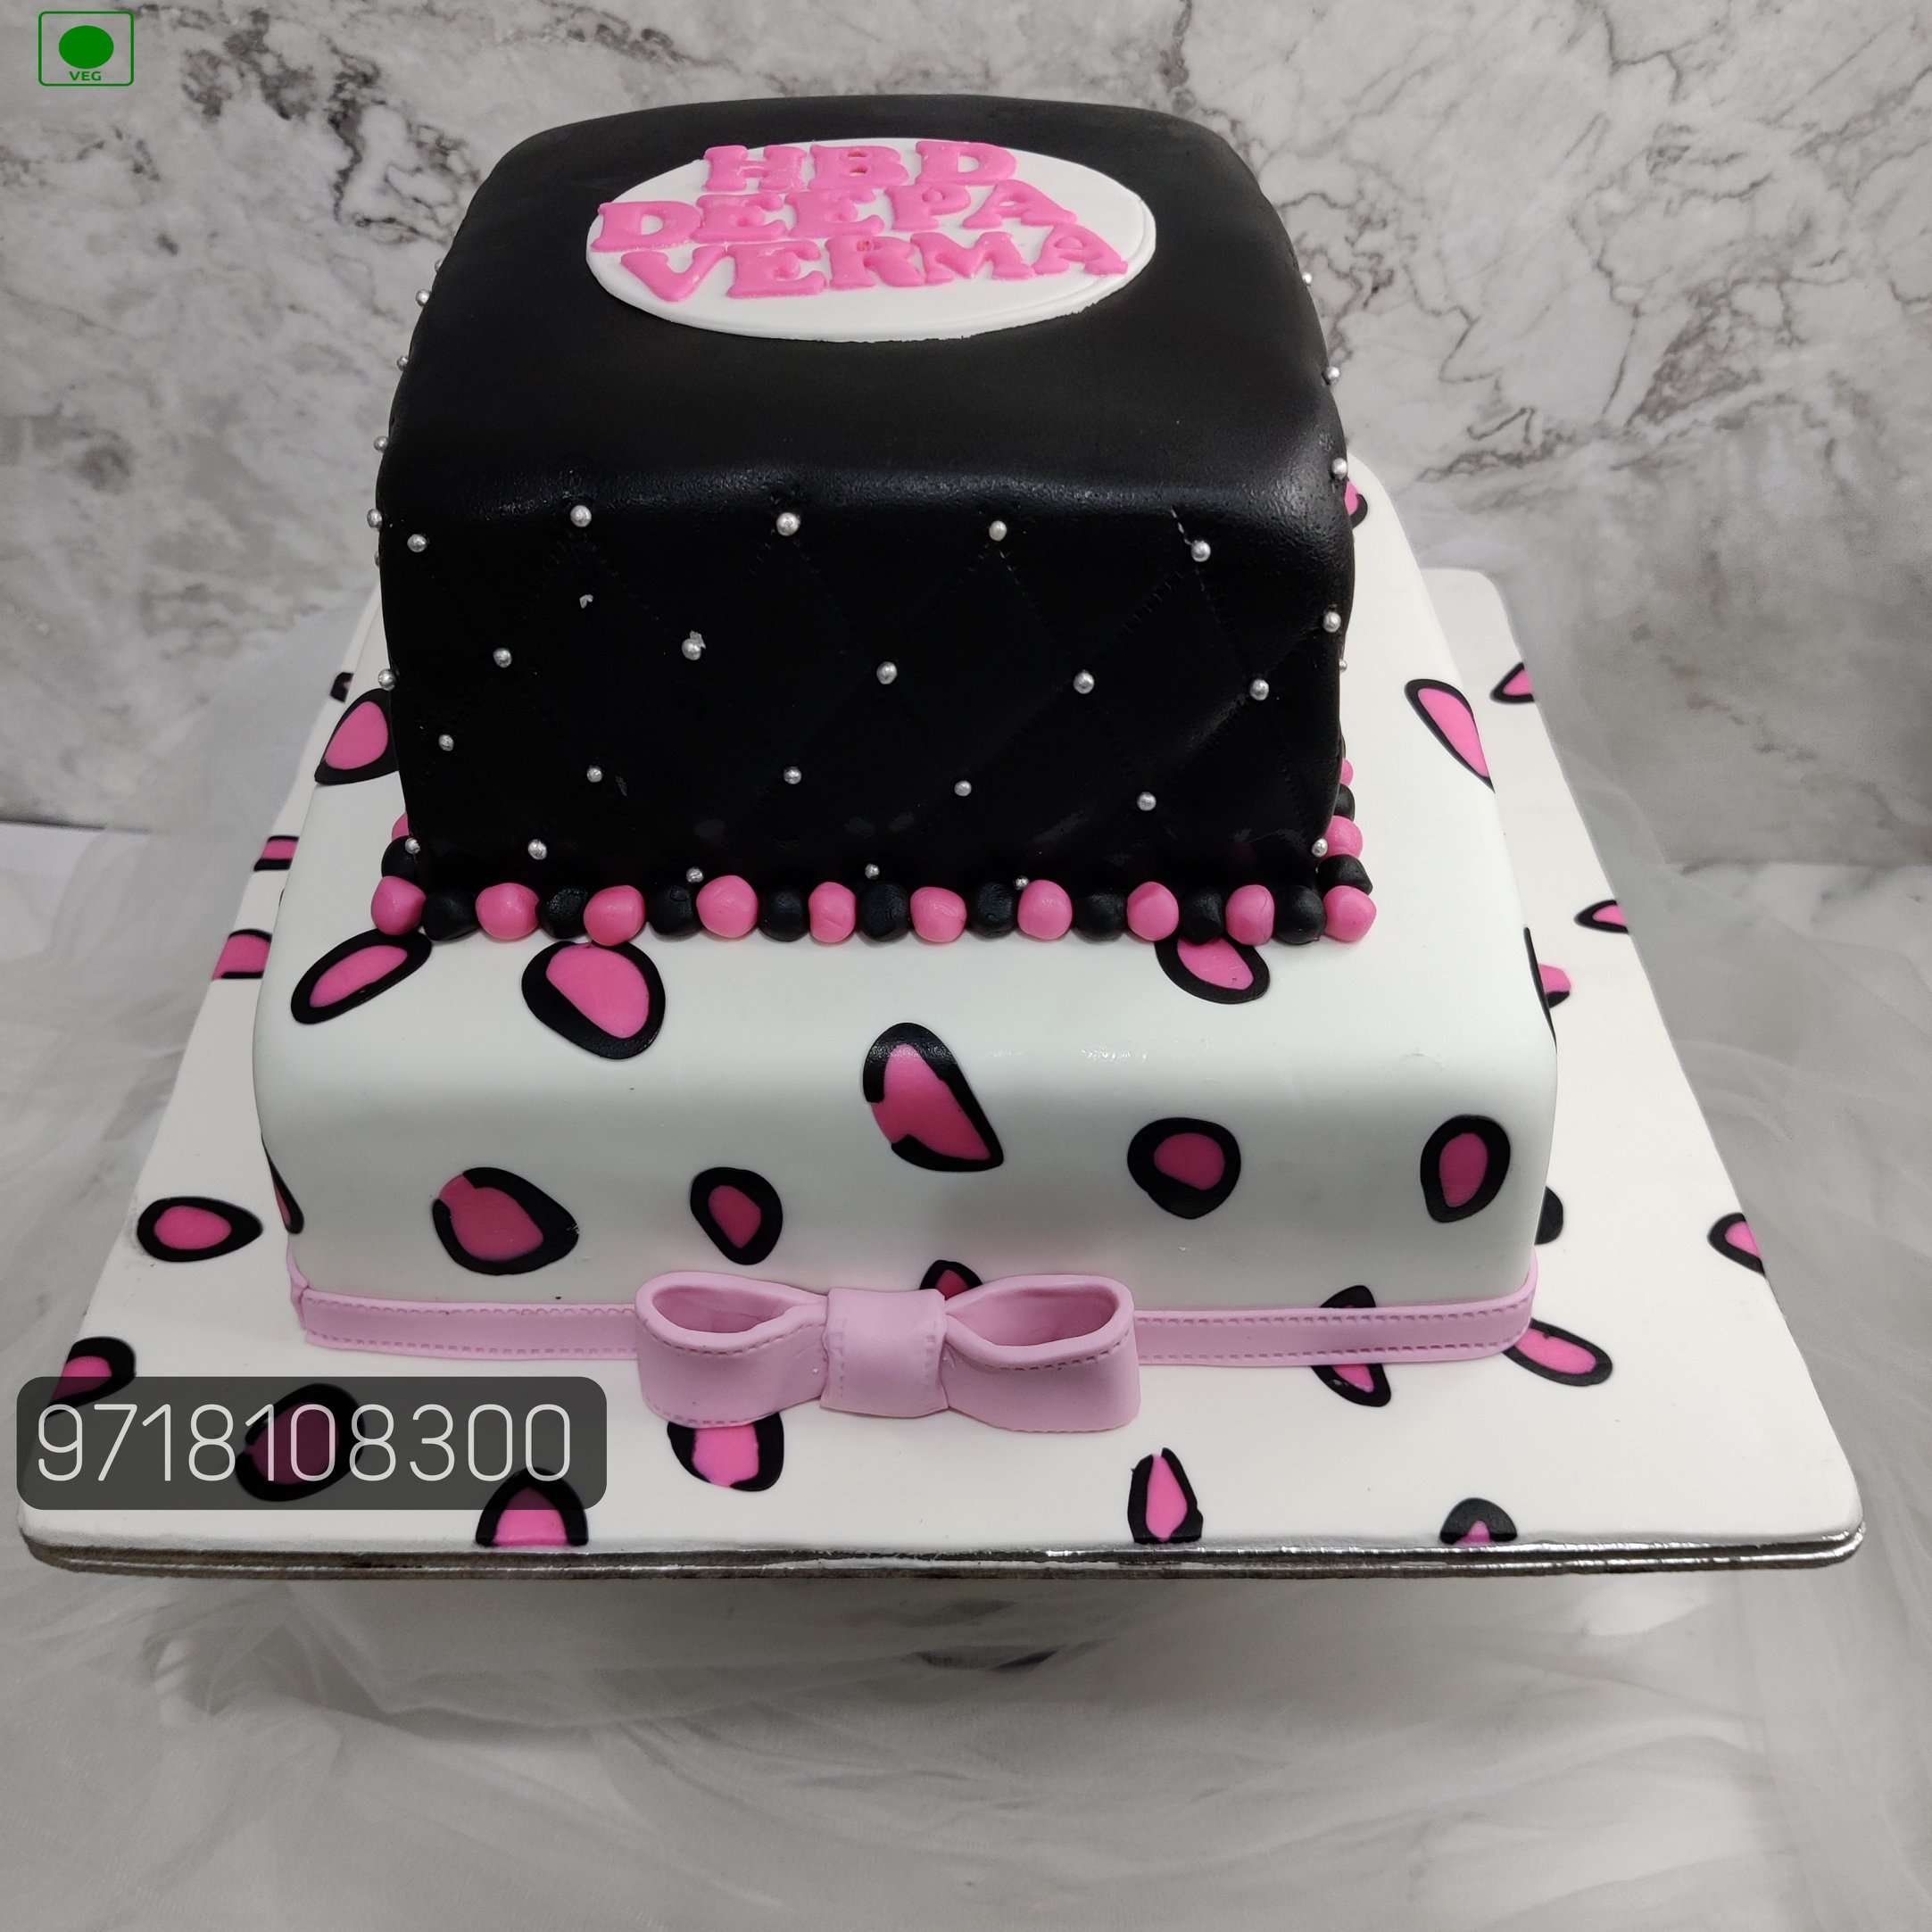 Birthday girl - Bento cakes – One Florist